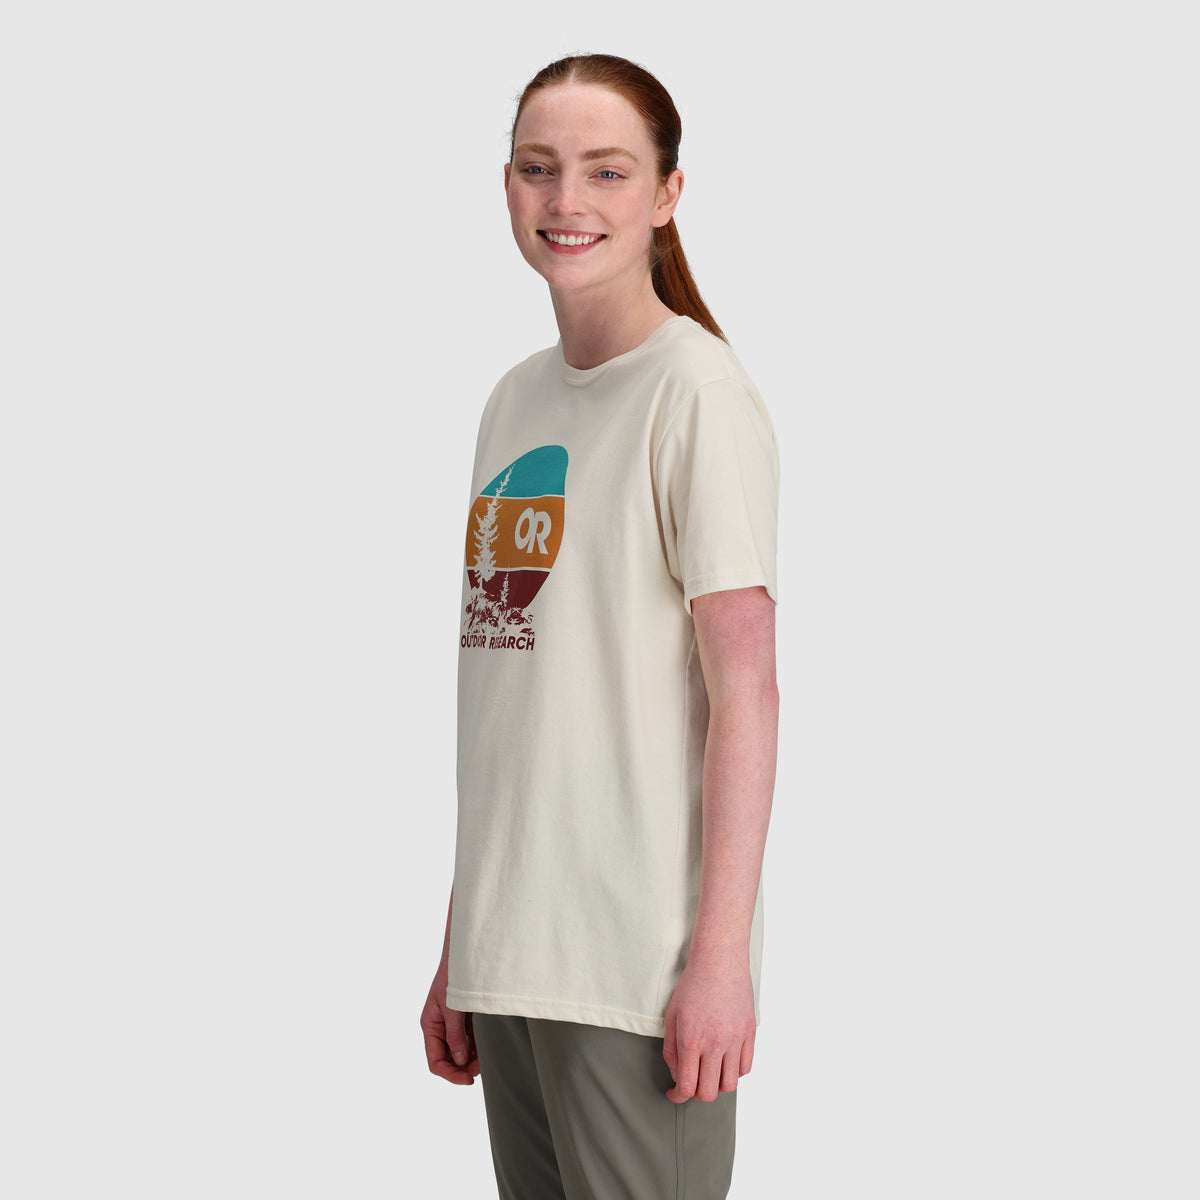 Outdoor Research®中性款 Sunset Logo T-Shirt